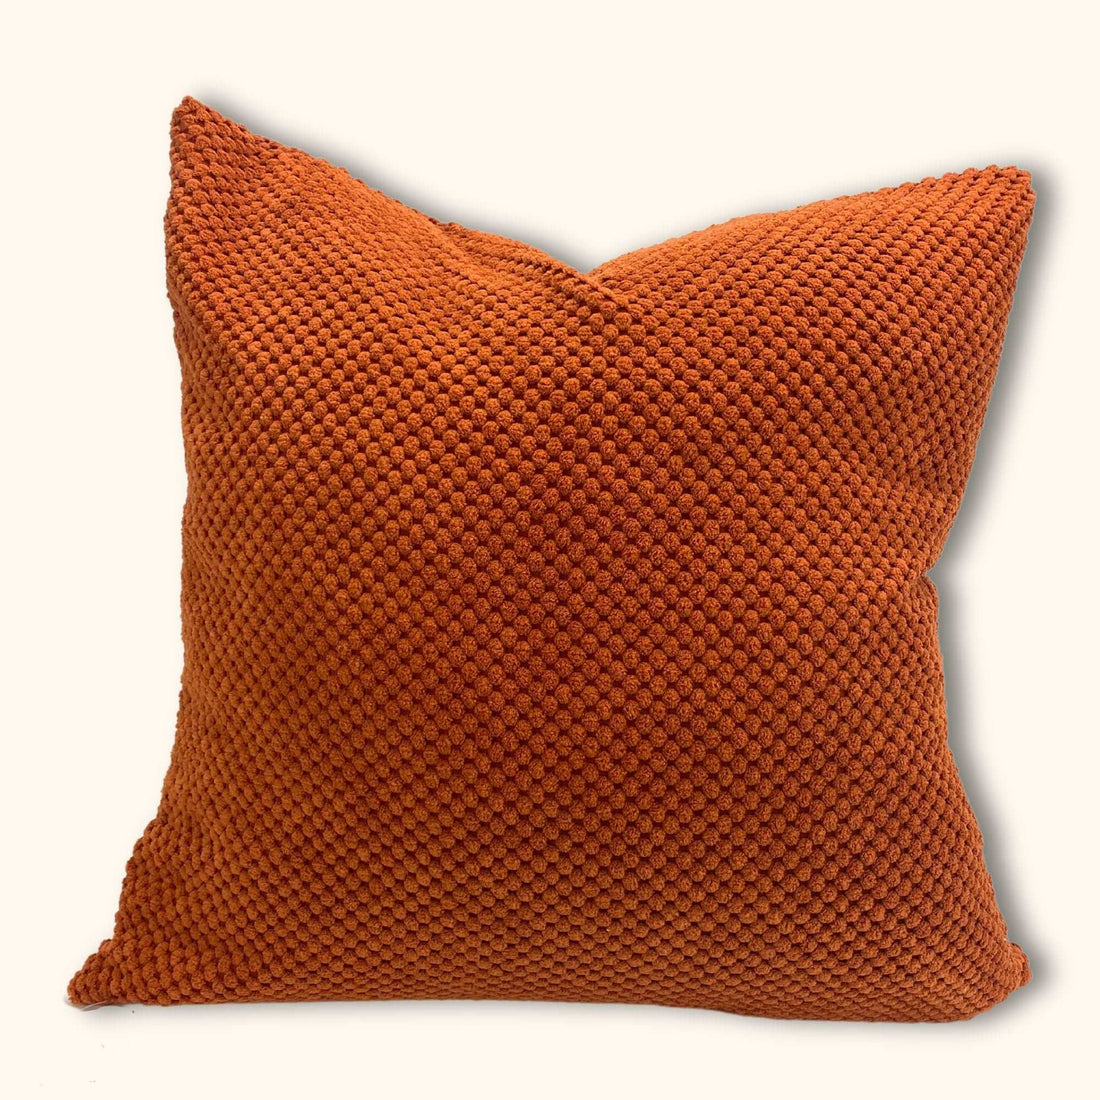 Dunelm Burnt Orange Square Cushion Cover - Sunshine Thrift - Cushion covers